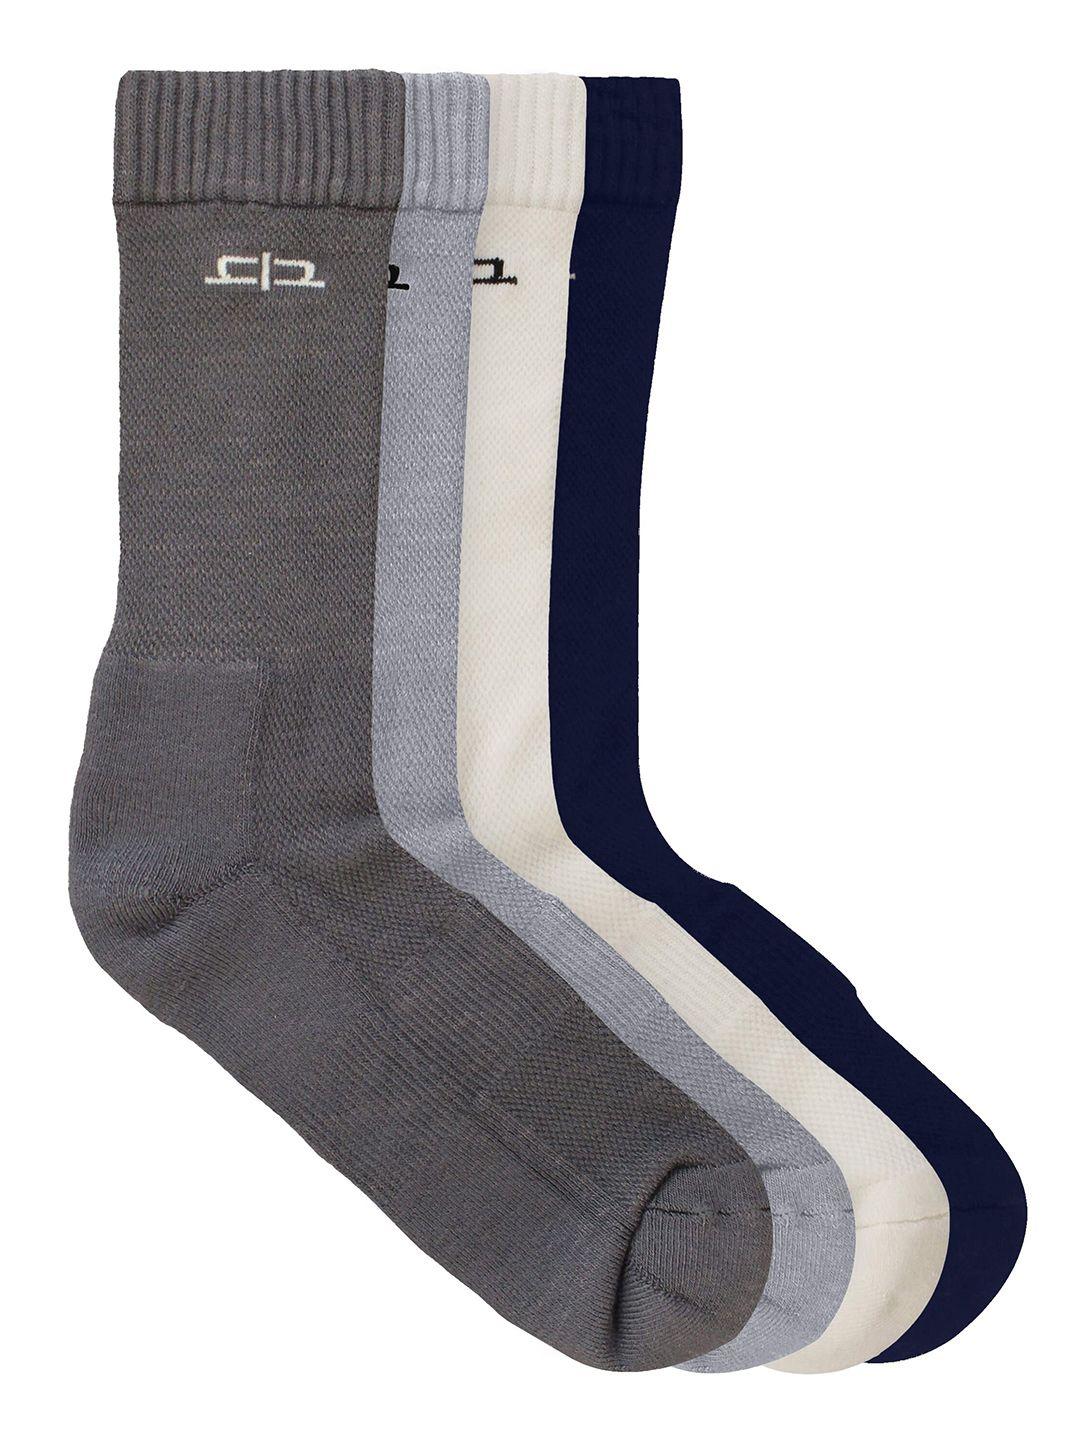 heelium-men-pack-of-4-patterned-bamboo-calf-length-socks